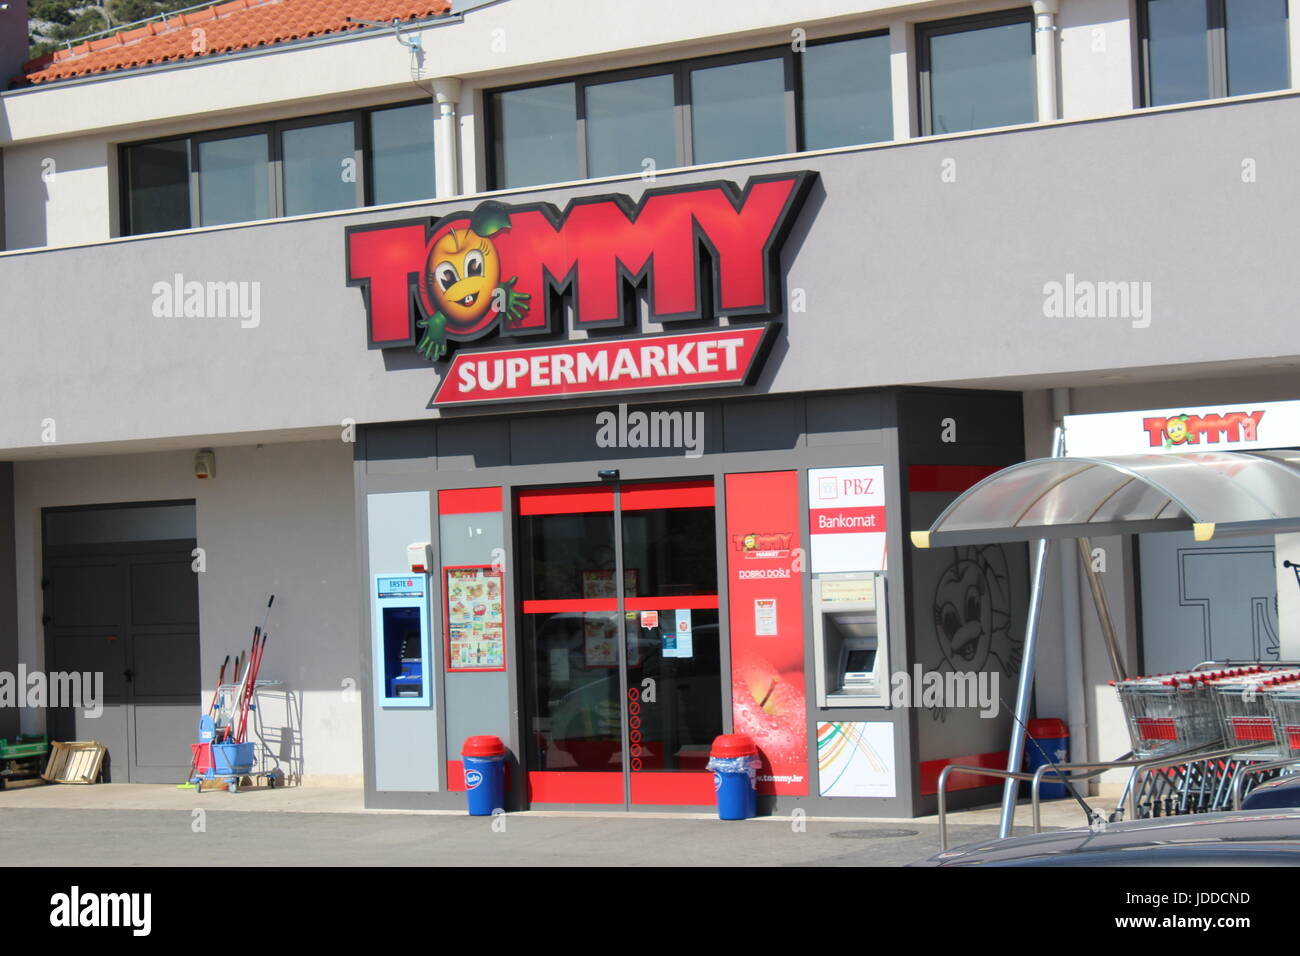 Exterior or Tommy supermarket in Agana marina Croatia Stock Photo - Alamy